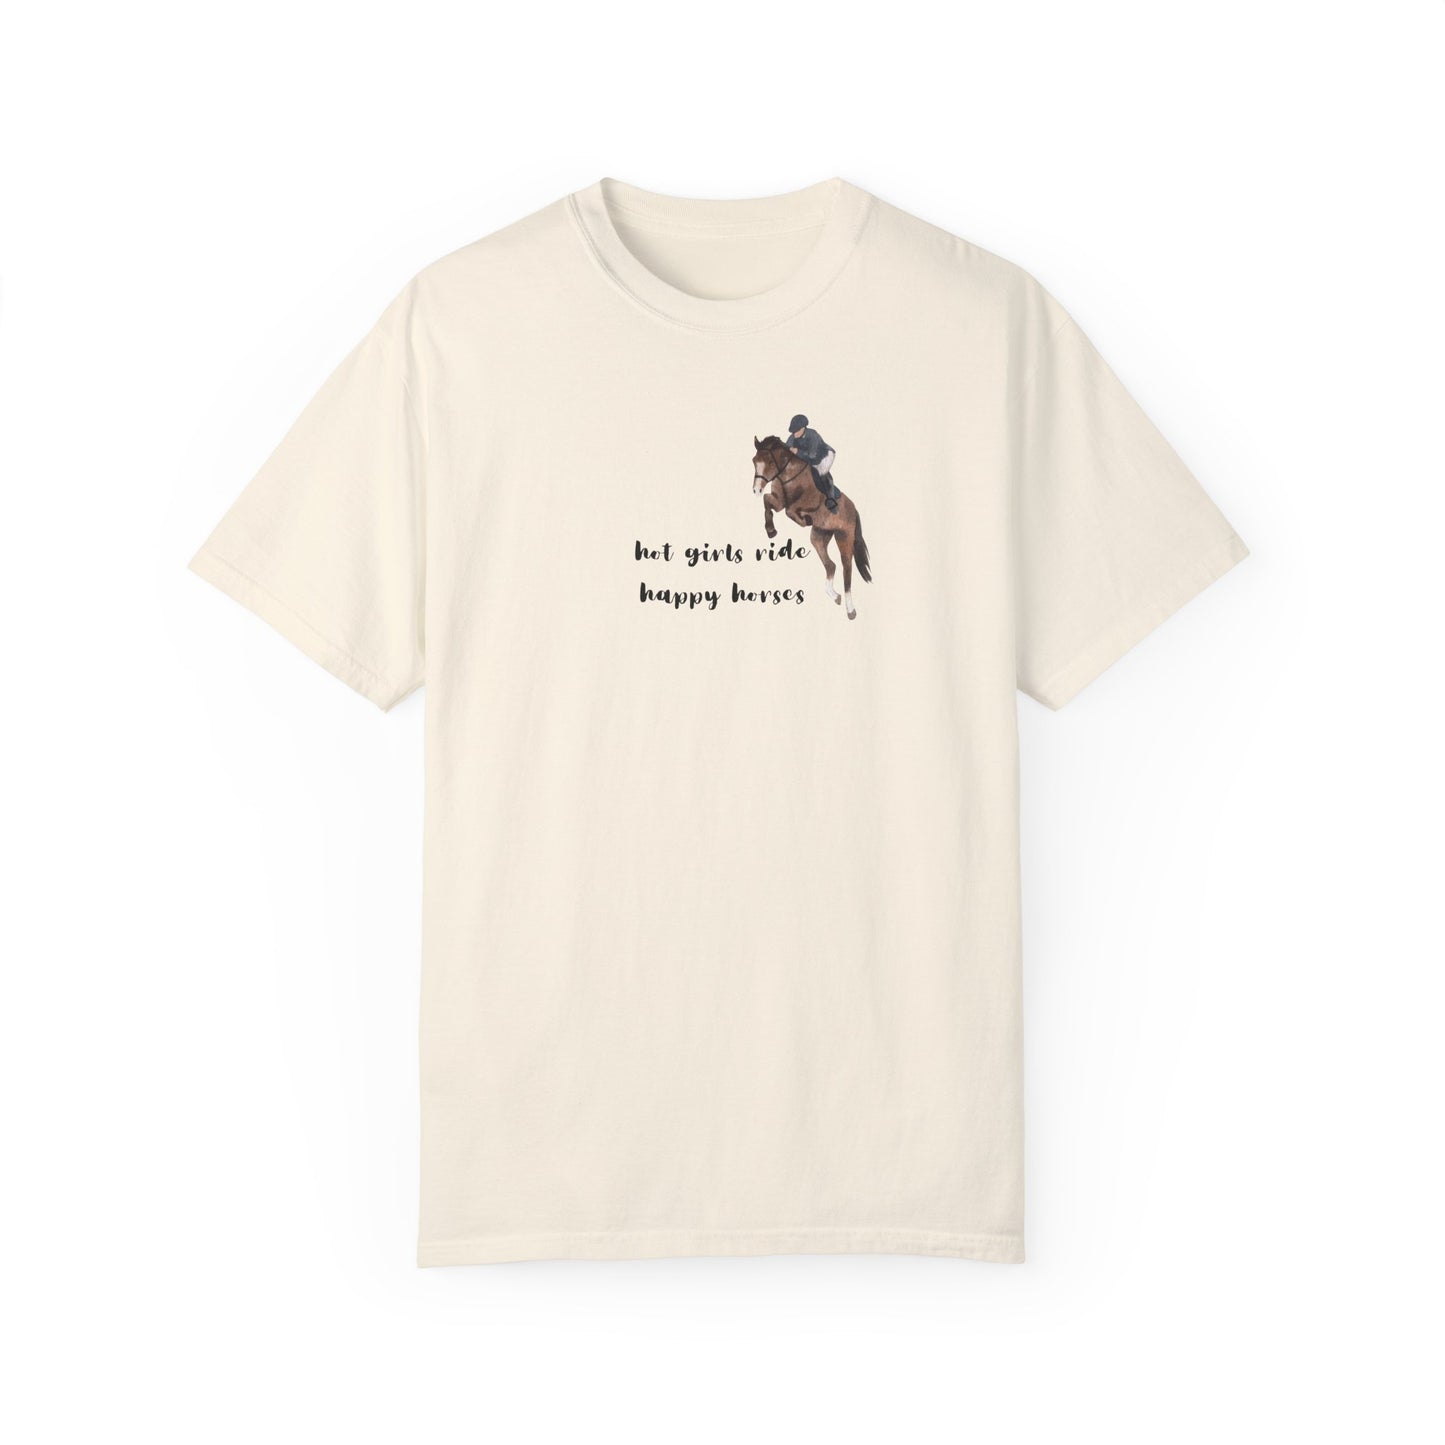 Hot Girls Ride Happy Horses T-shirt